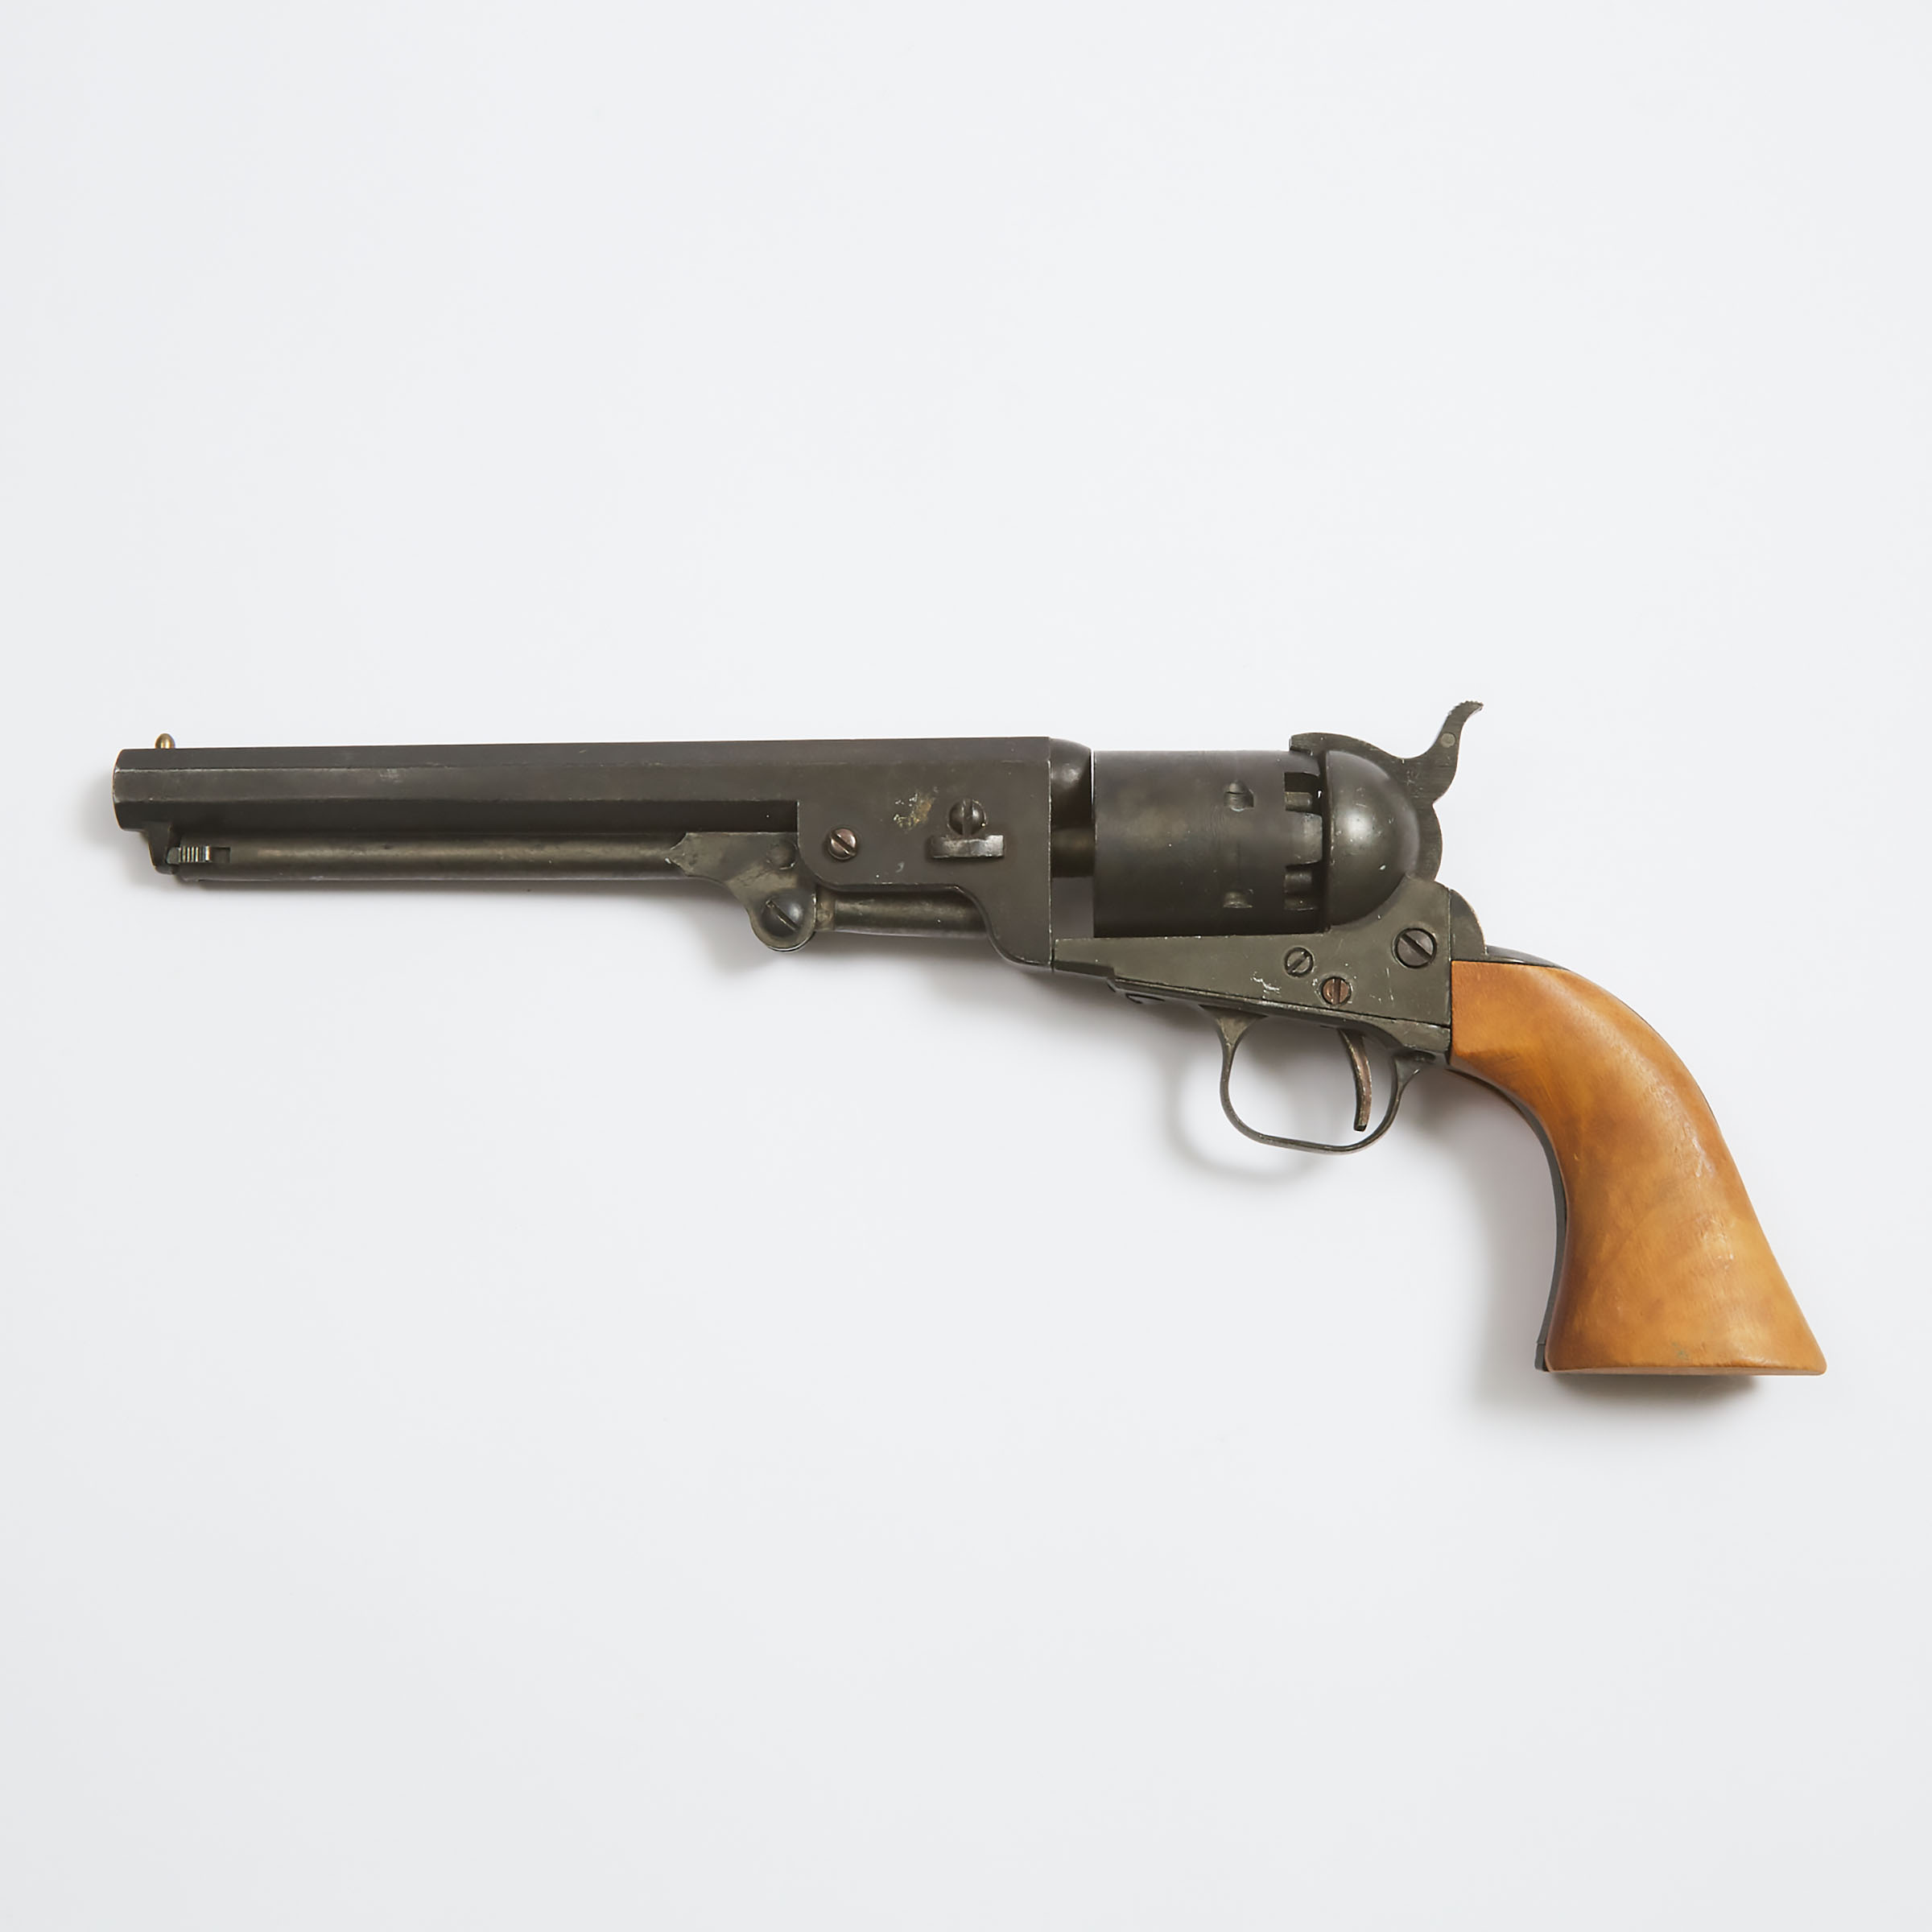 Japanese Replica Cap Gun Modelled as a Colt 1851 Navy Revolver, mid 20th century